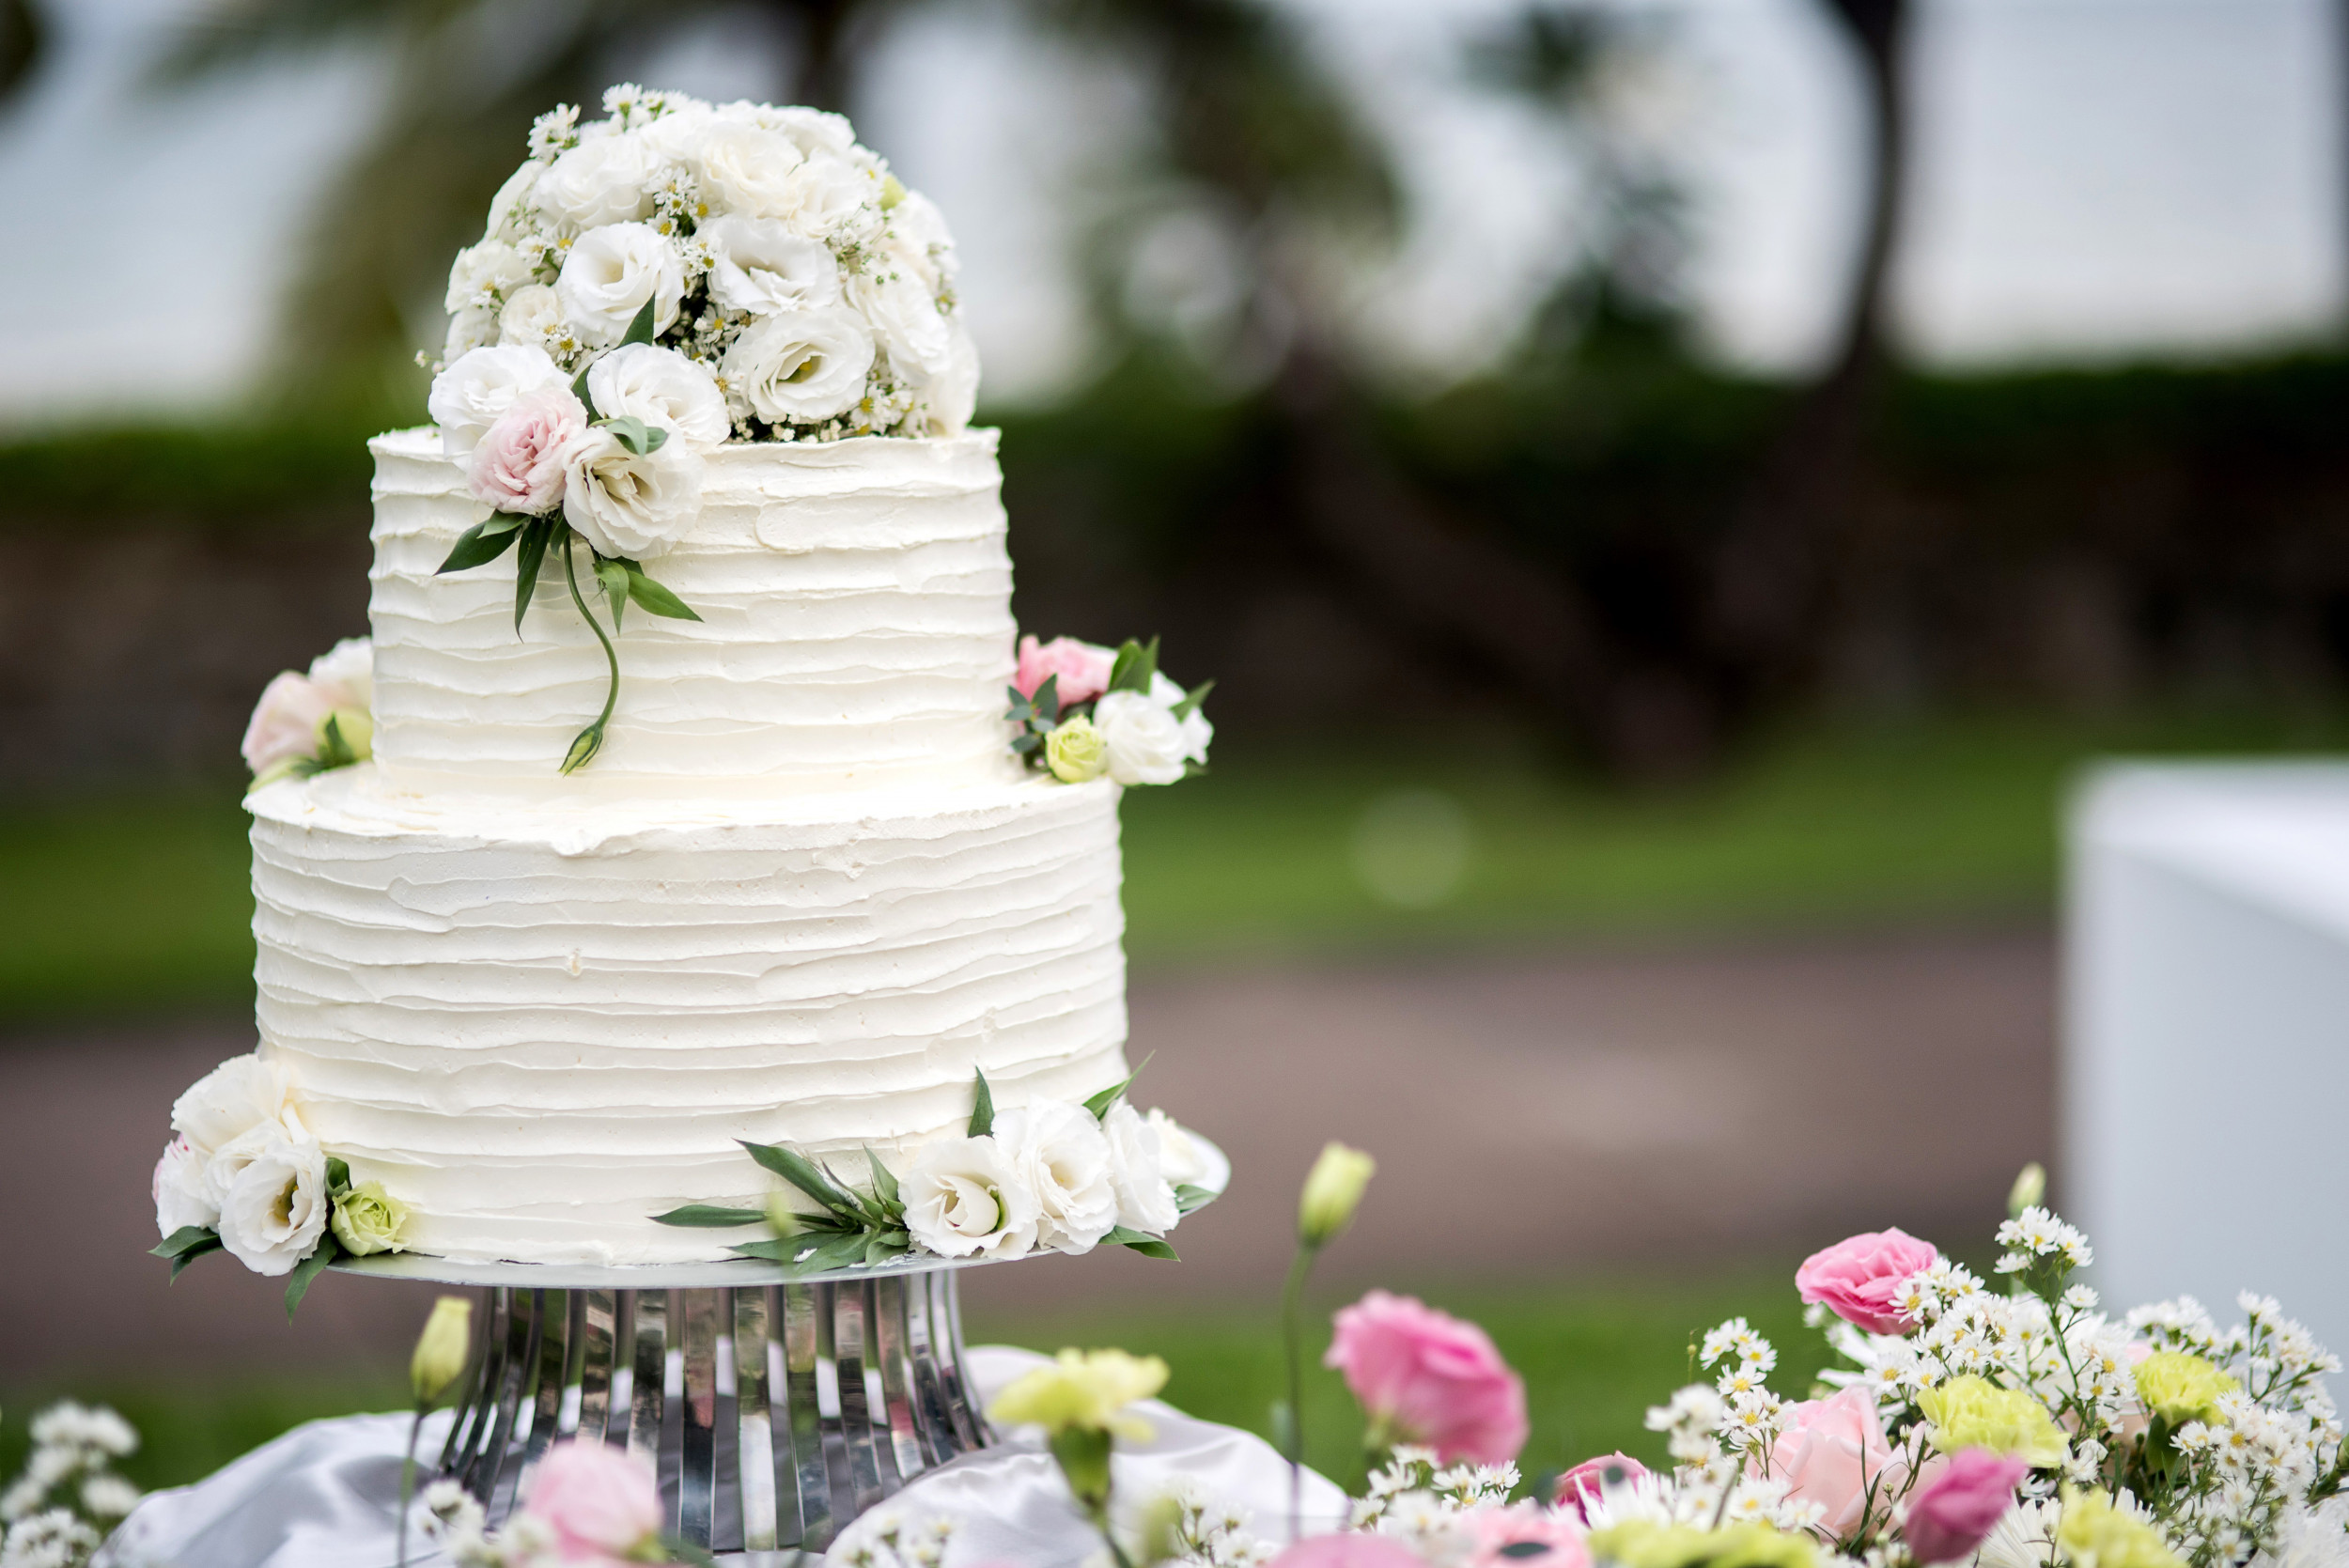 TOP TEN WEDDING CAKE TRENDS 2020 BY ELIZABETH'S CAKE EMPORIUM | 5 STAR  WEDDING BLOG